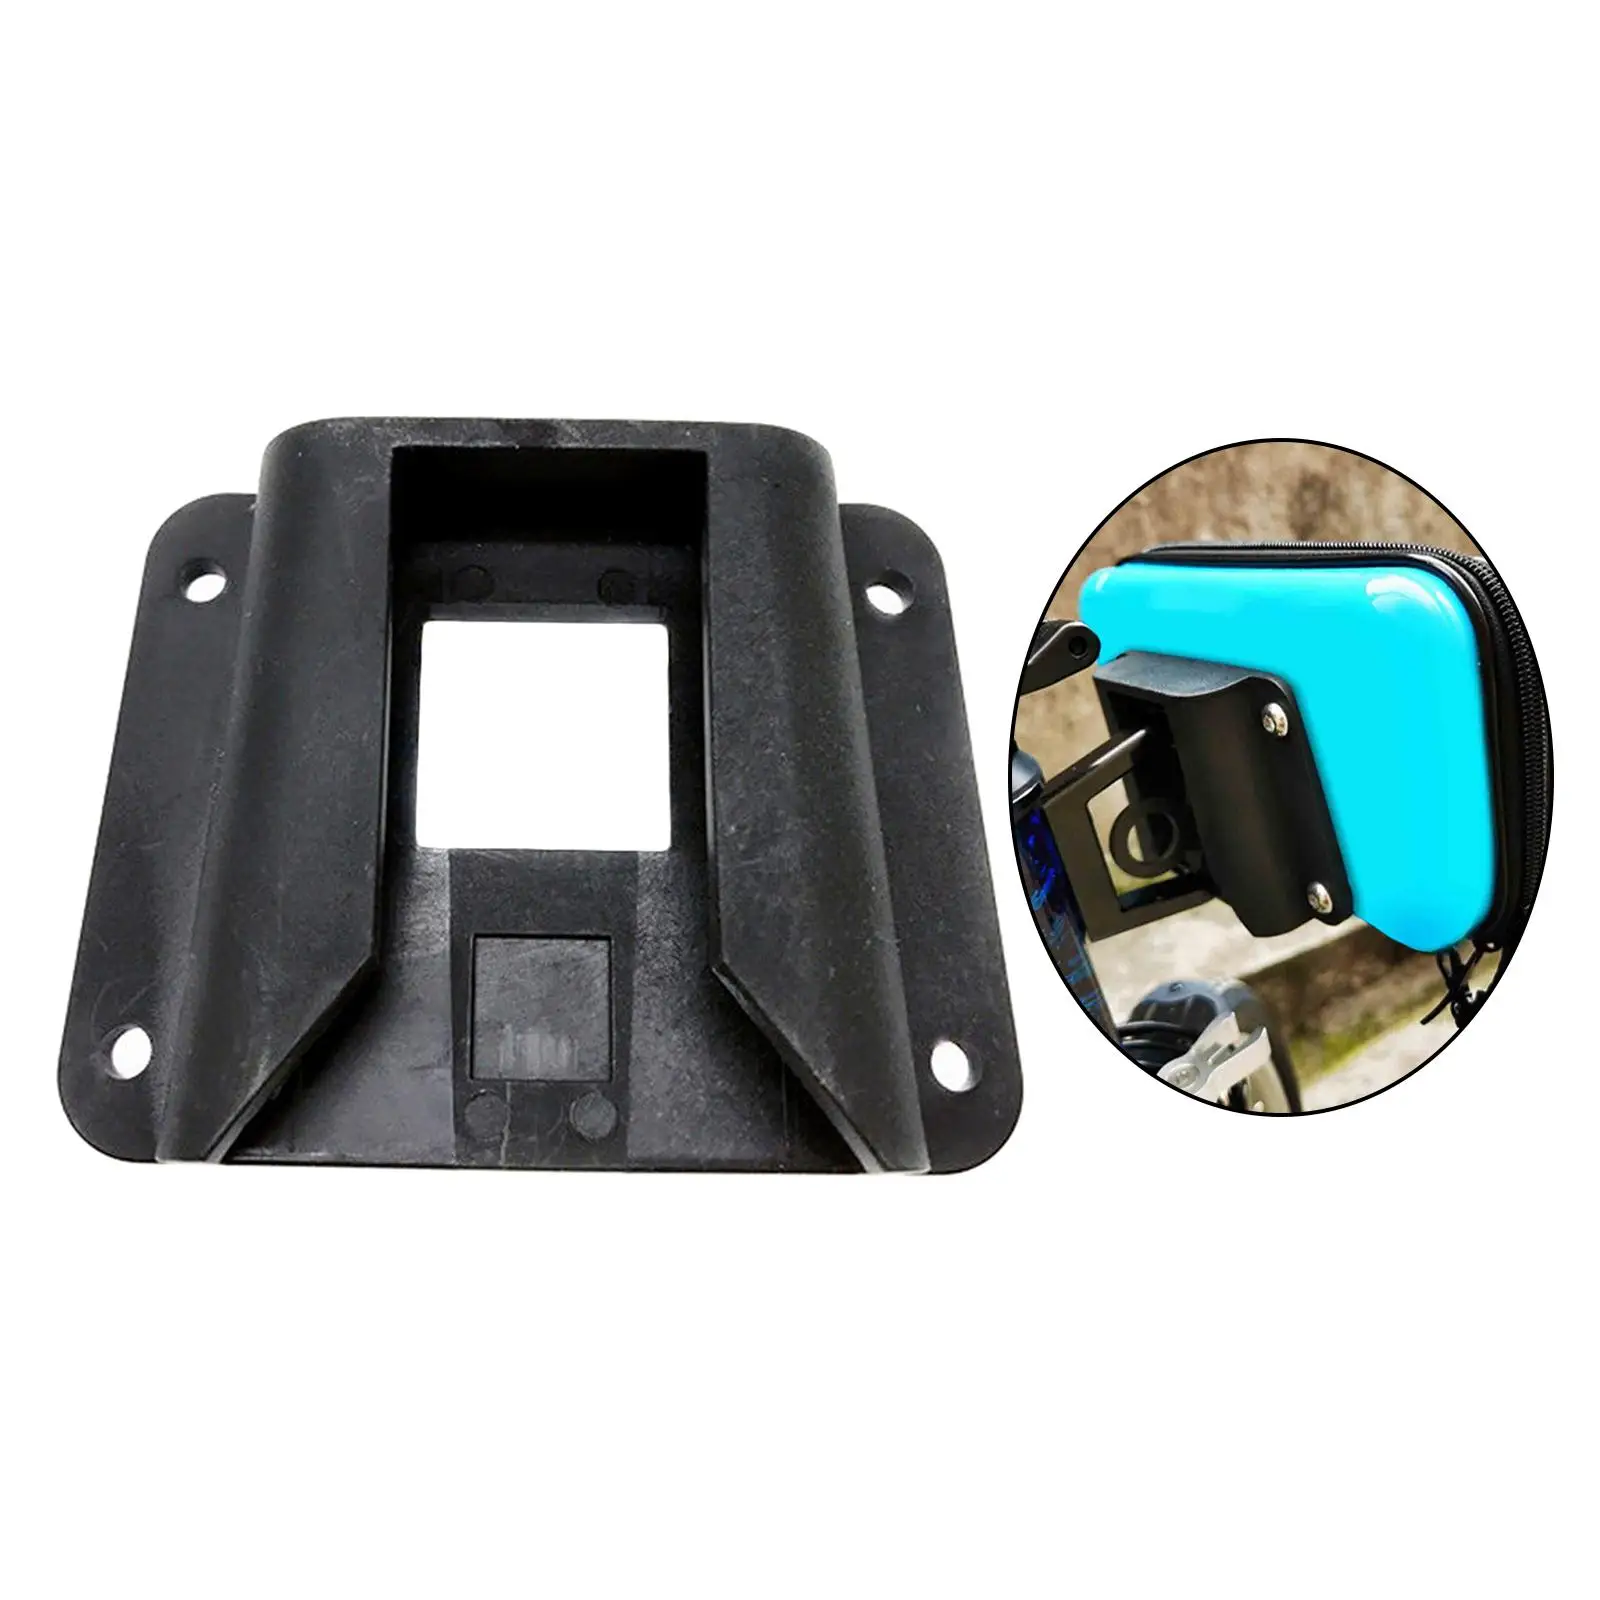 Bag Adapter Rack for Folding 05x75mm Holder Accessories Black